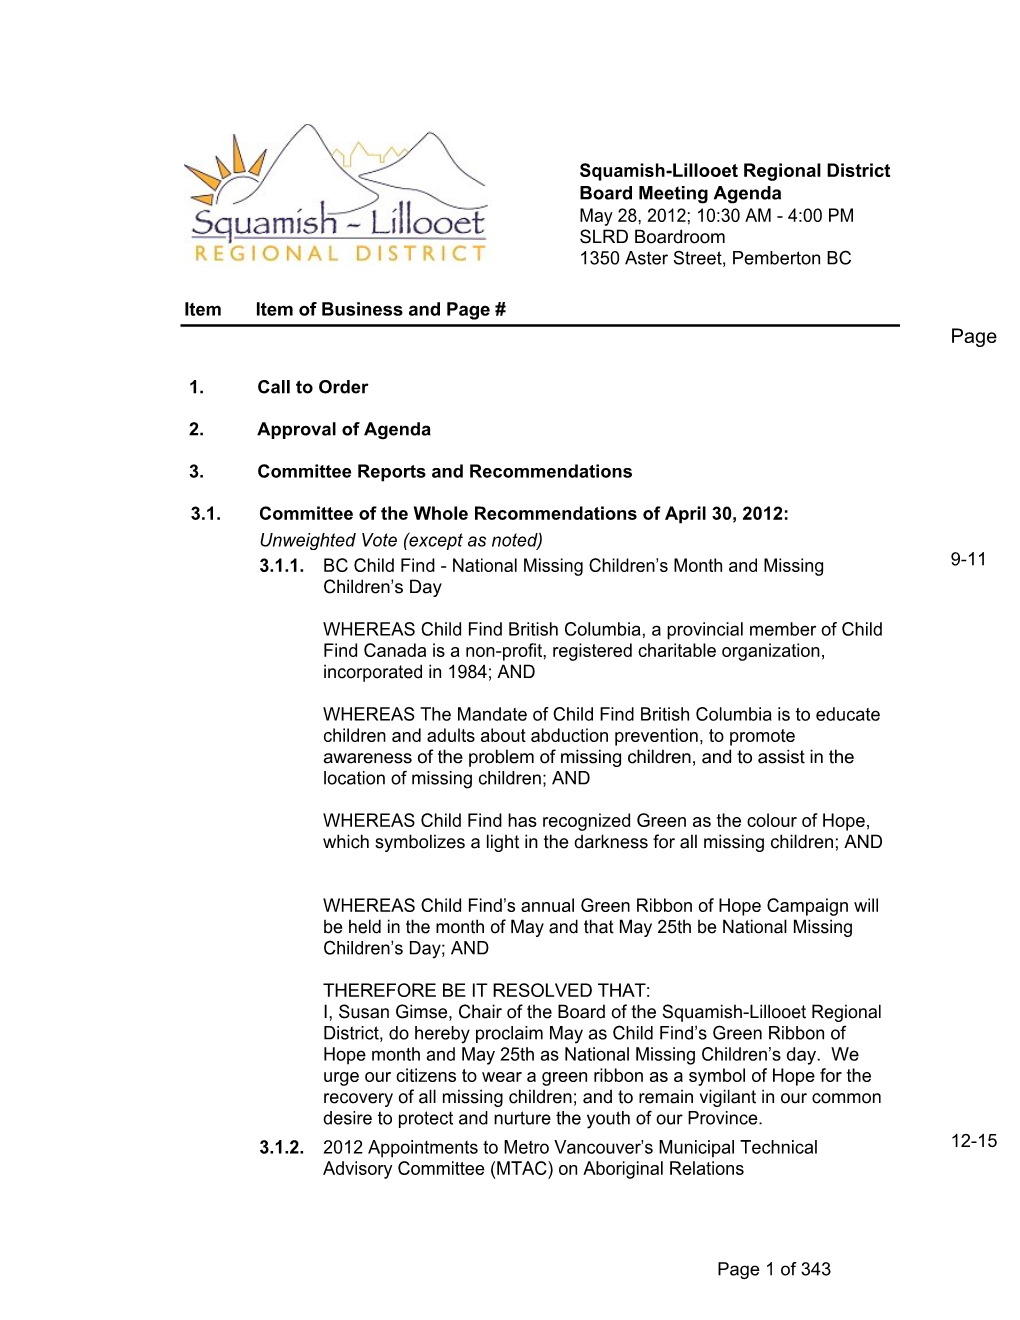 Squamish-Lillooet Regional District Board Meeting Agenda May 28, 2012; 10:30 AM - 4:00 PM SLRD Boardroom 1350 Aster Street, Pemberton BC